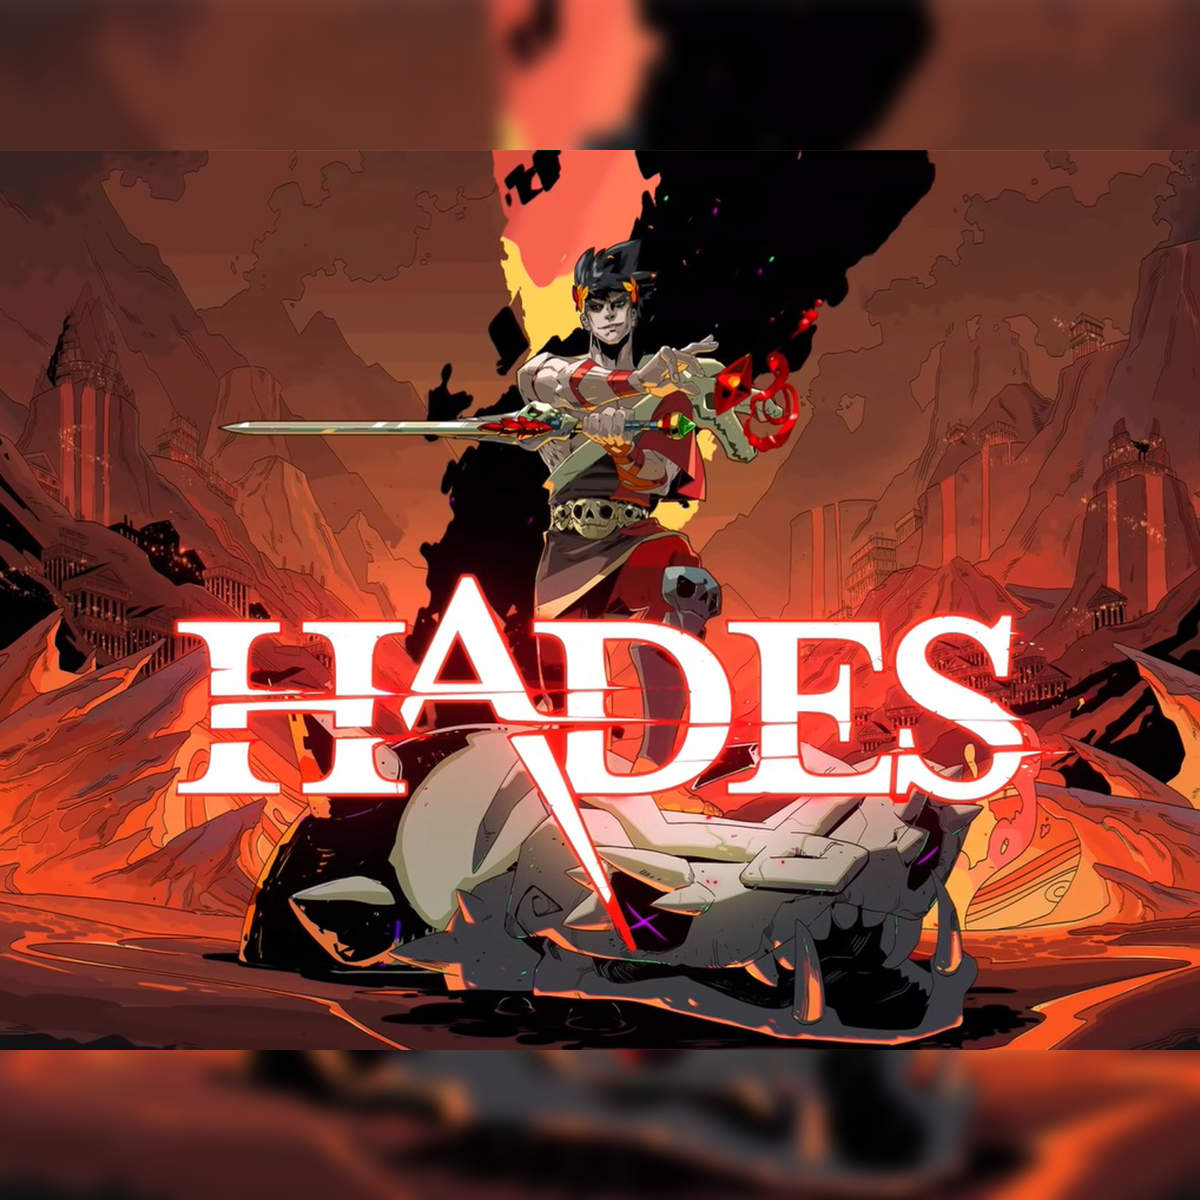 Hades (PC Digital Download)